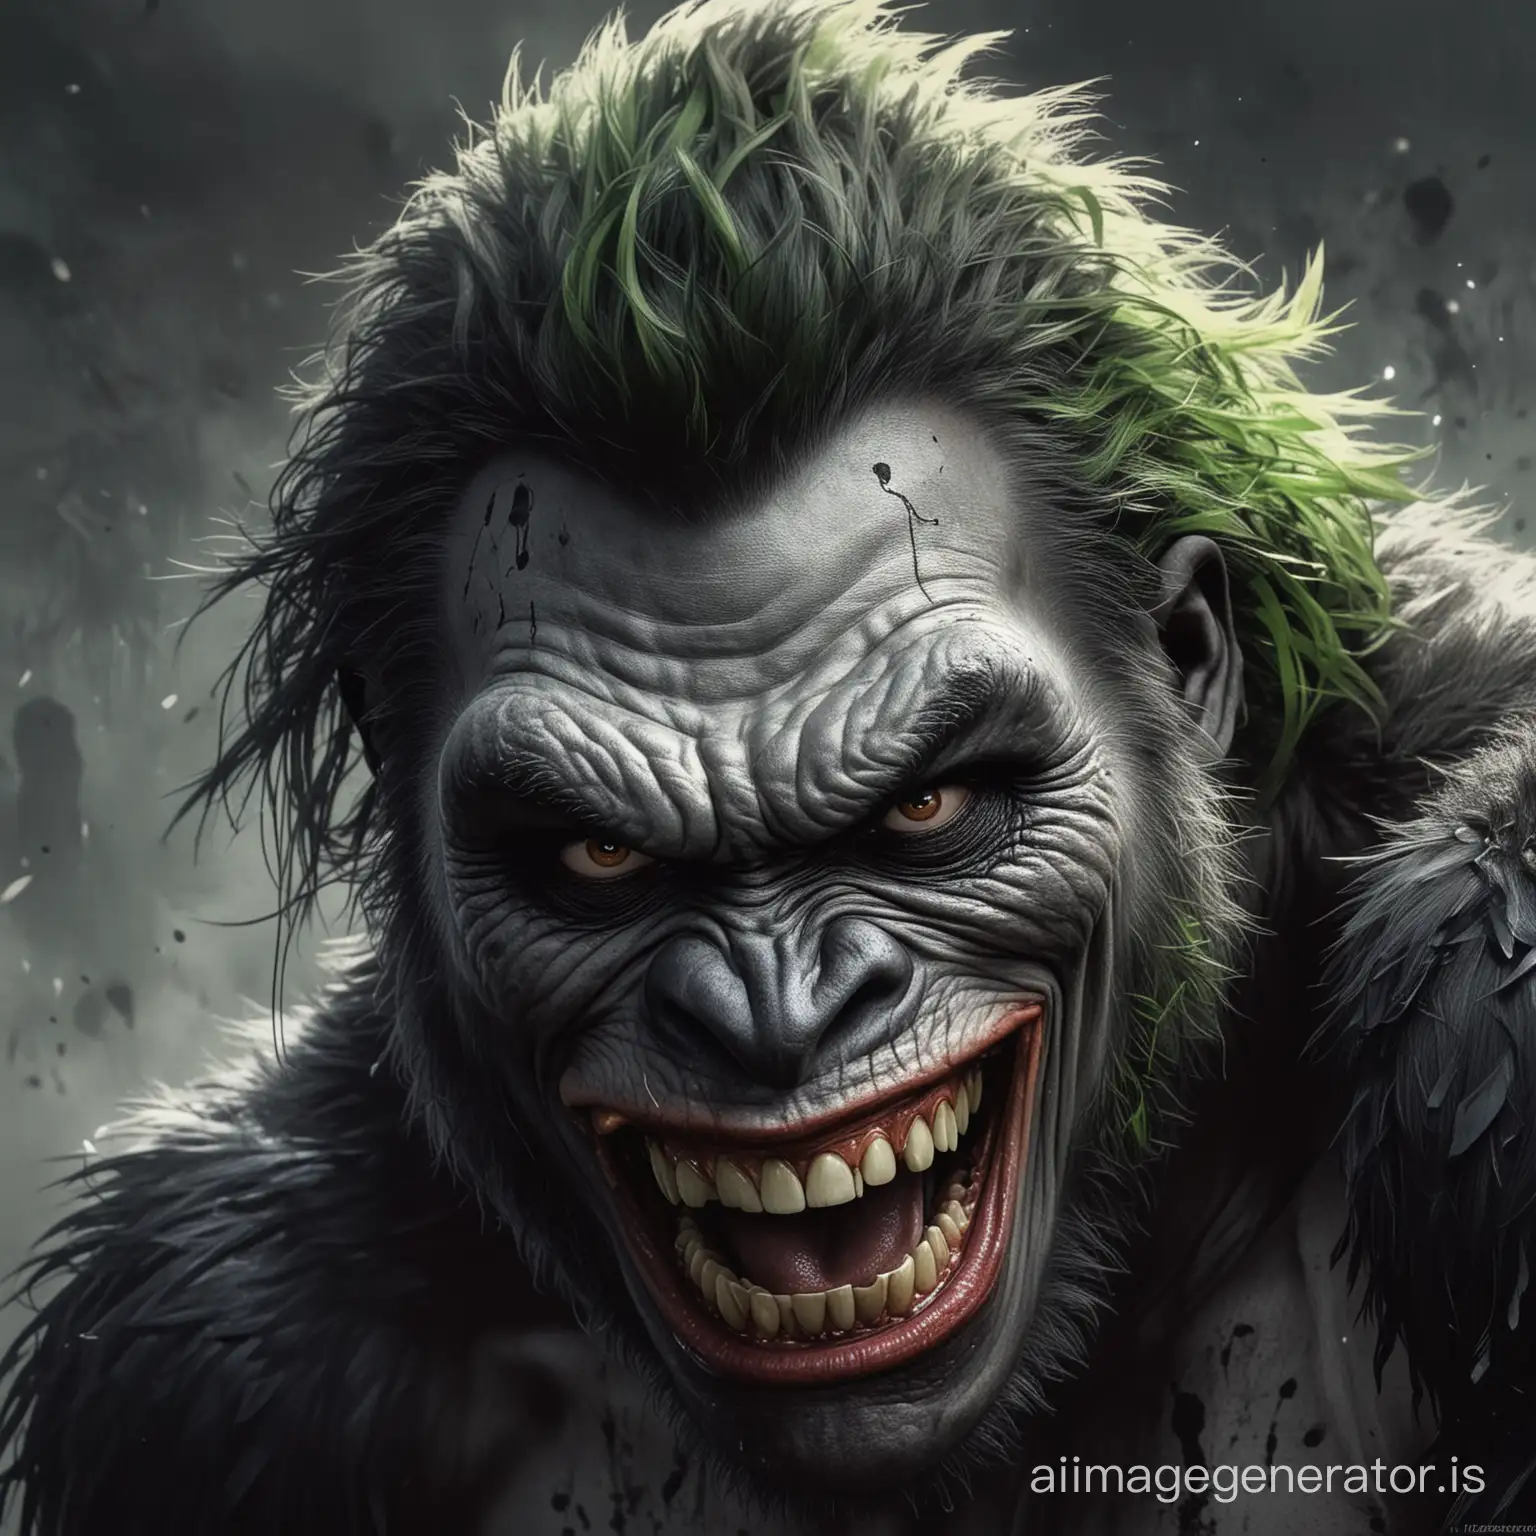 Gorila joker insano louco 